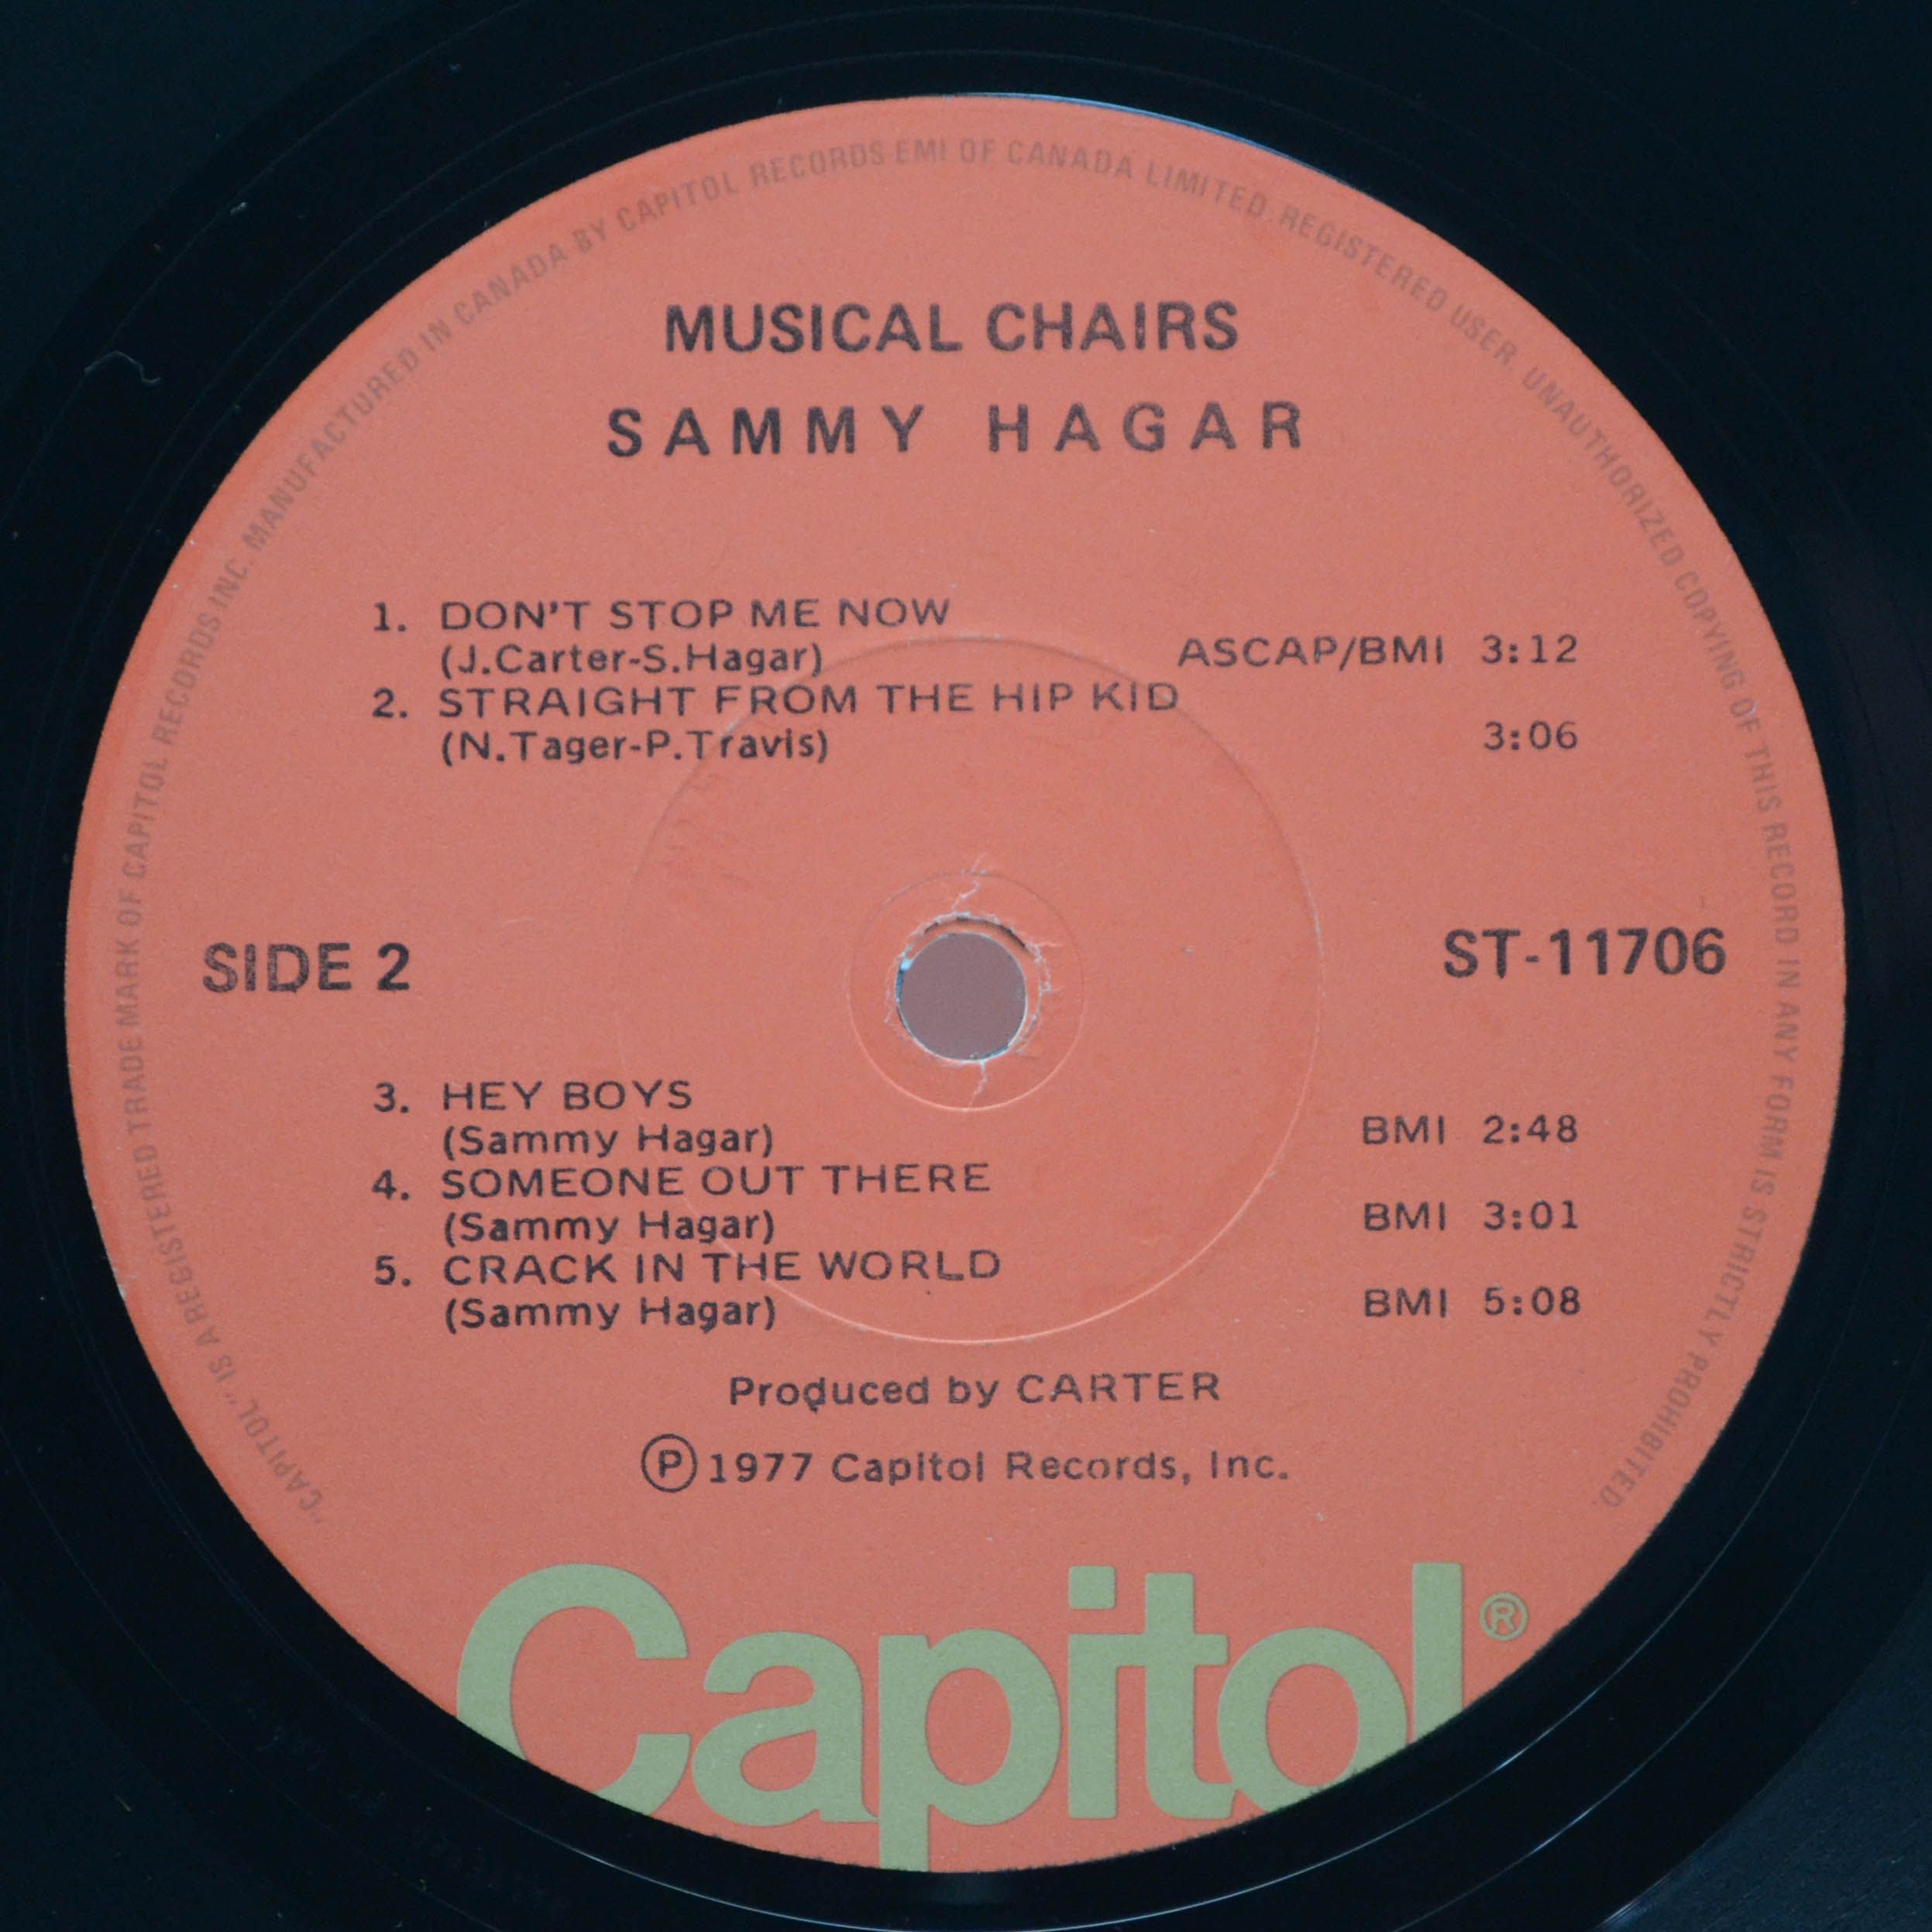 Sammy Hagar — Musical Chairs, 1977